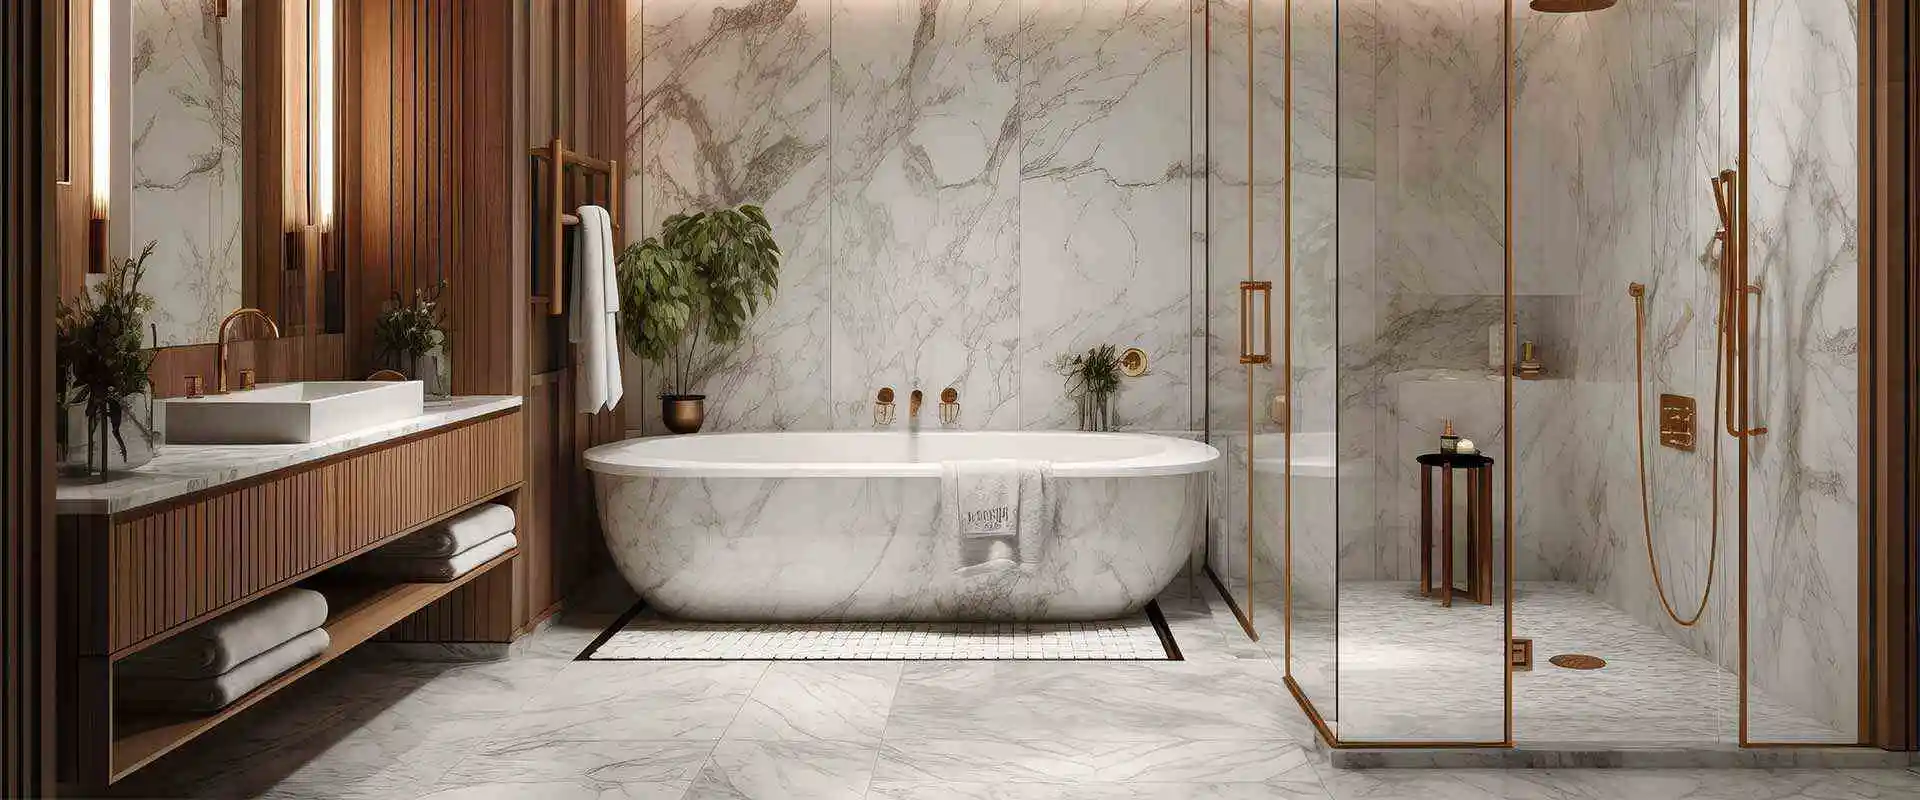 Bathroom Marble Designs and Ideas